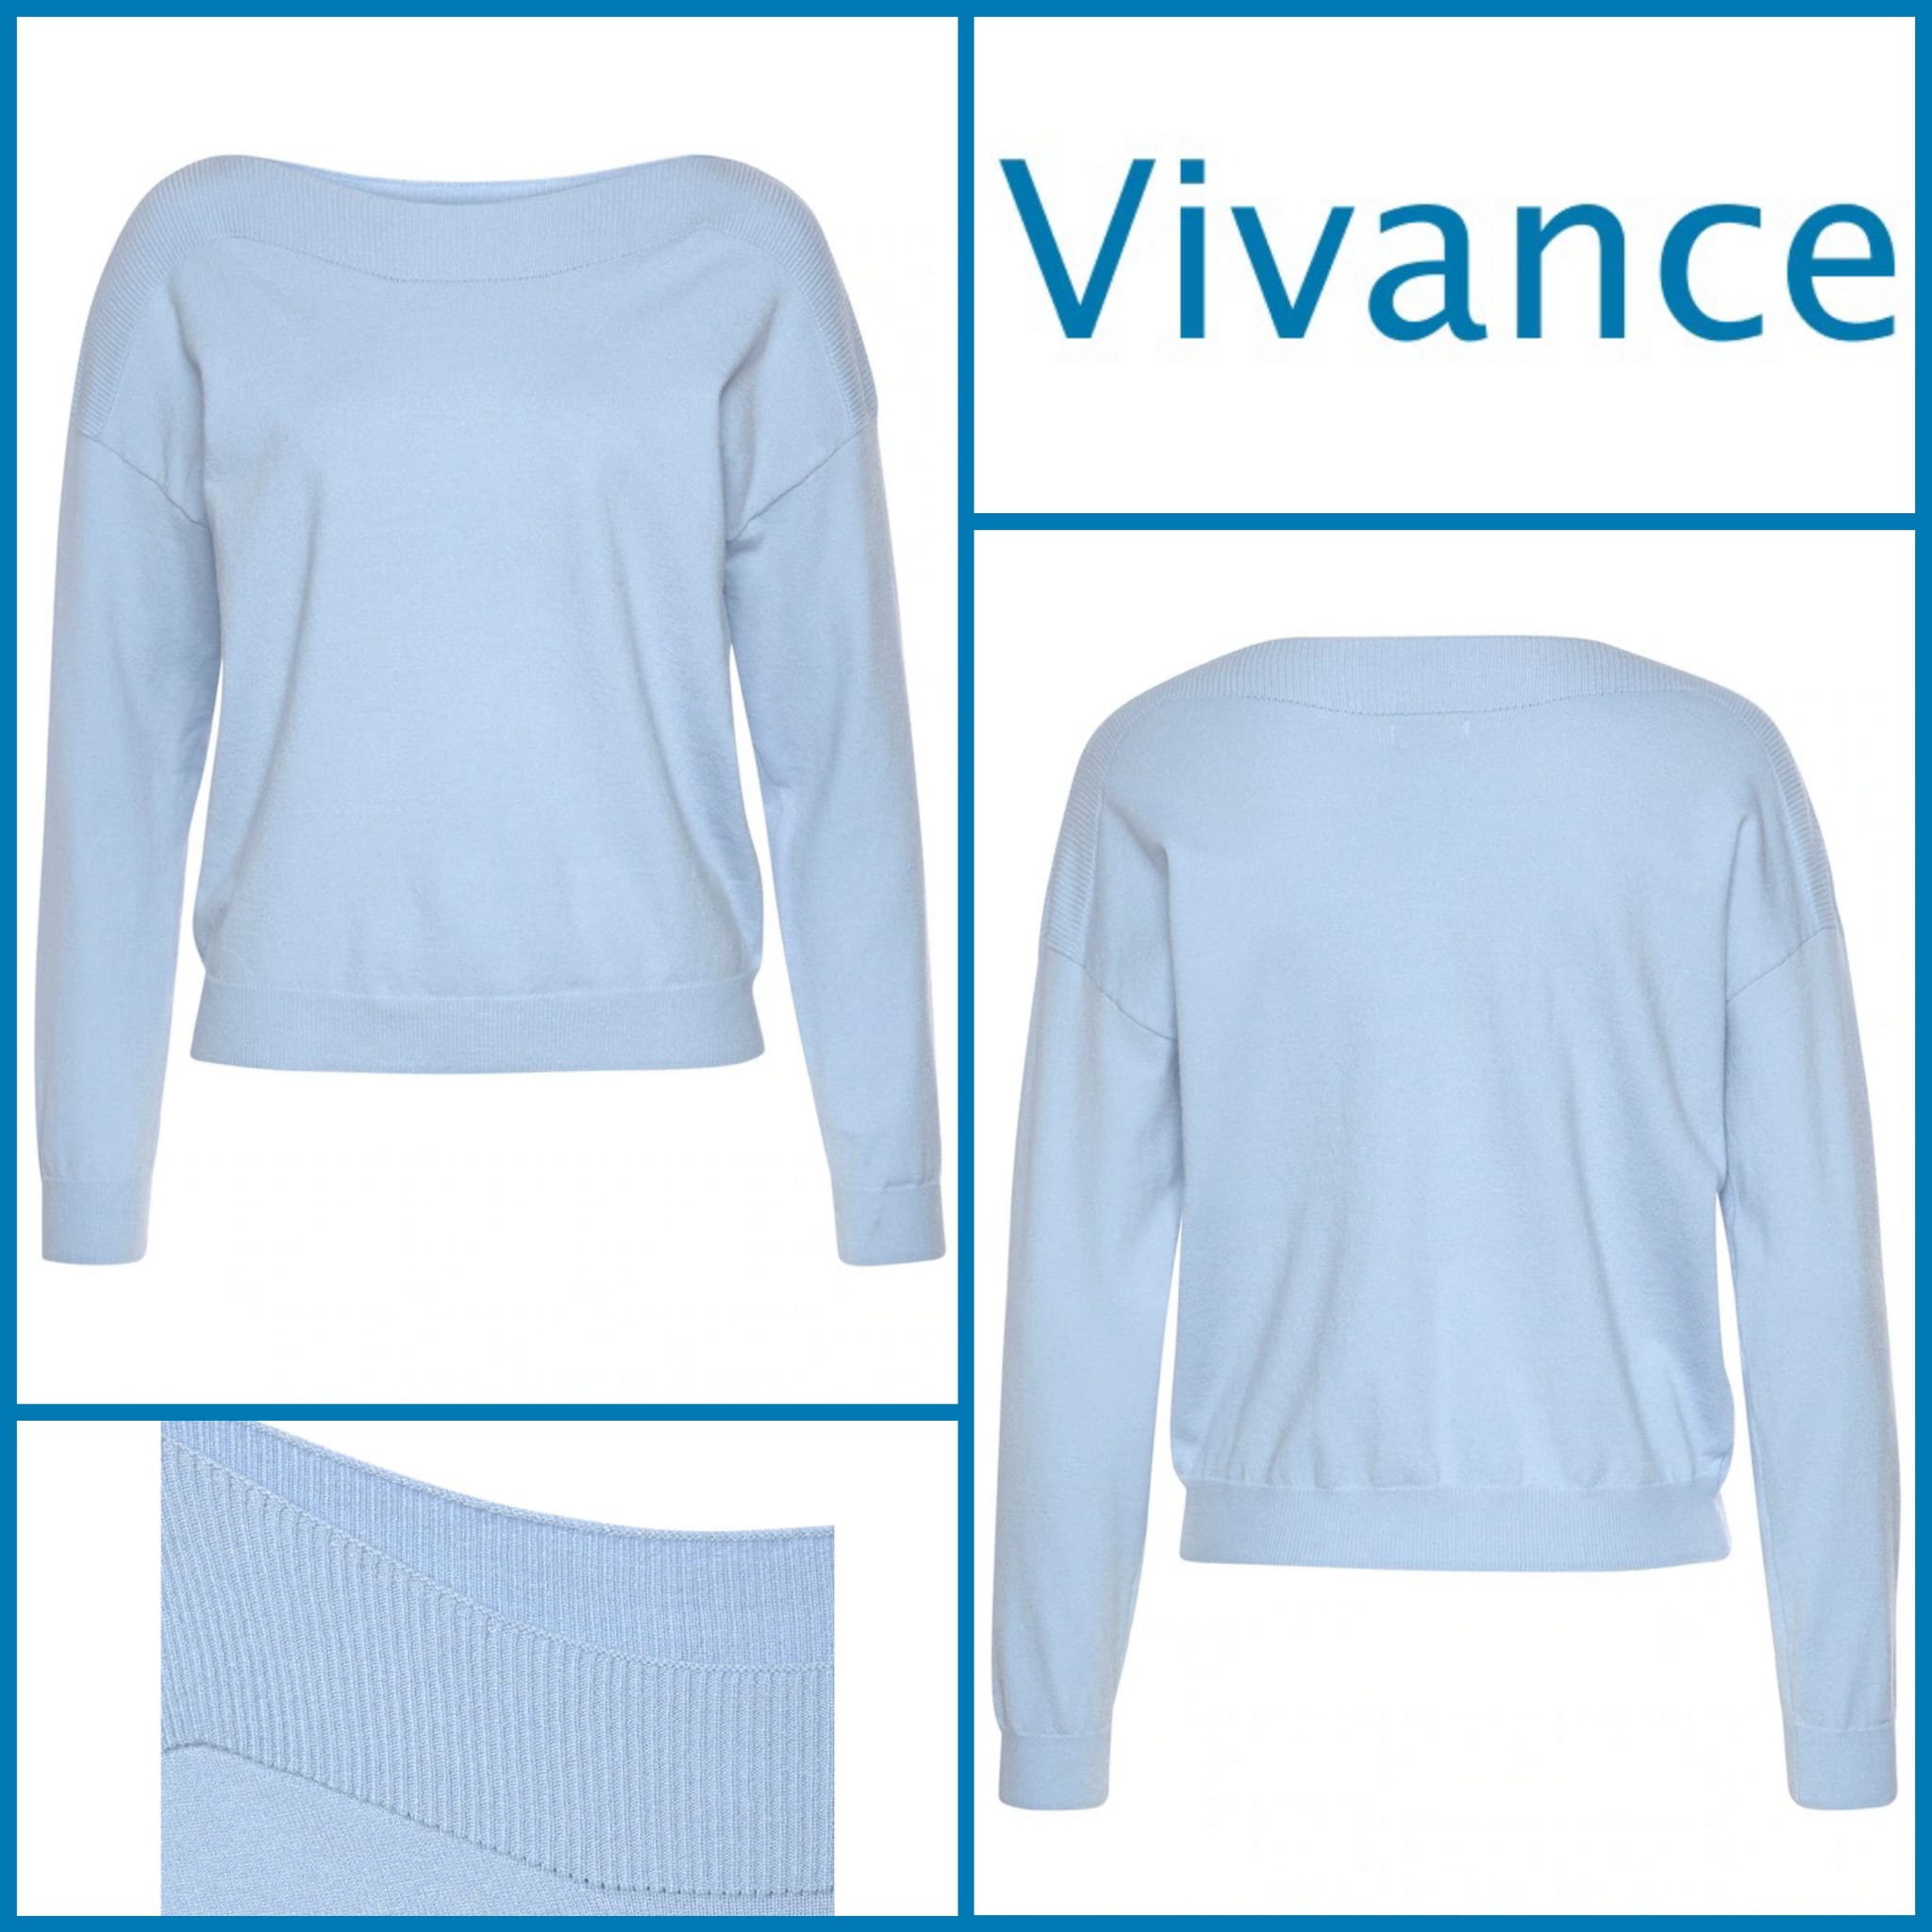 020147  Women's pullover from Vivance